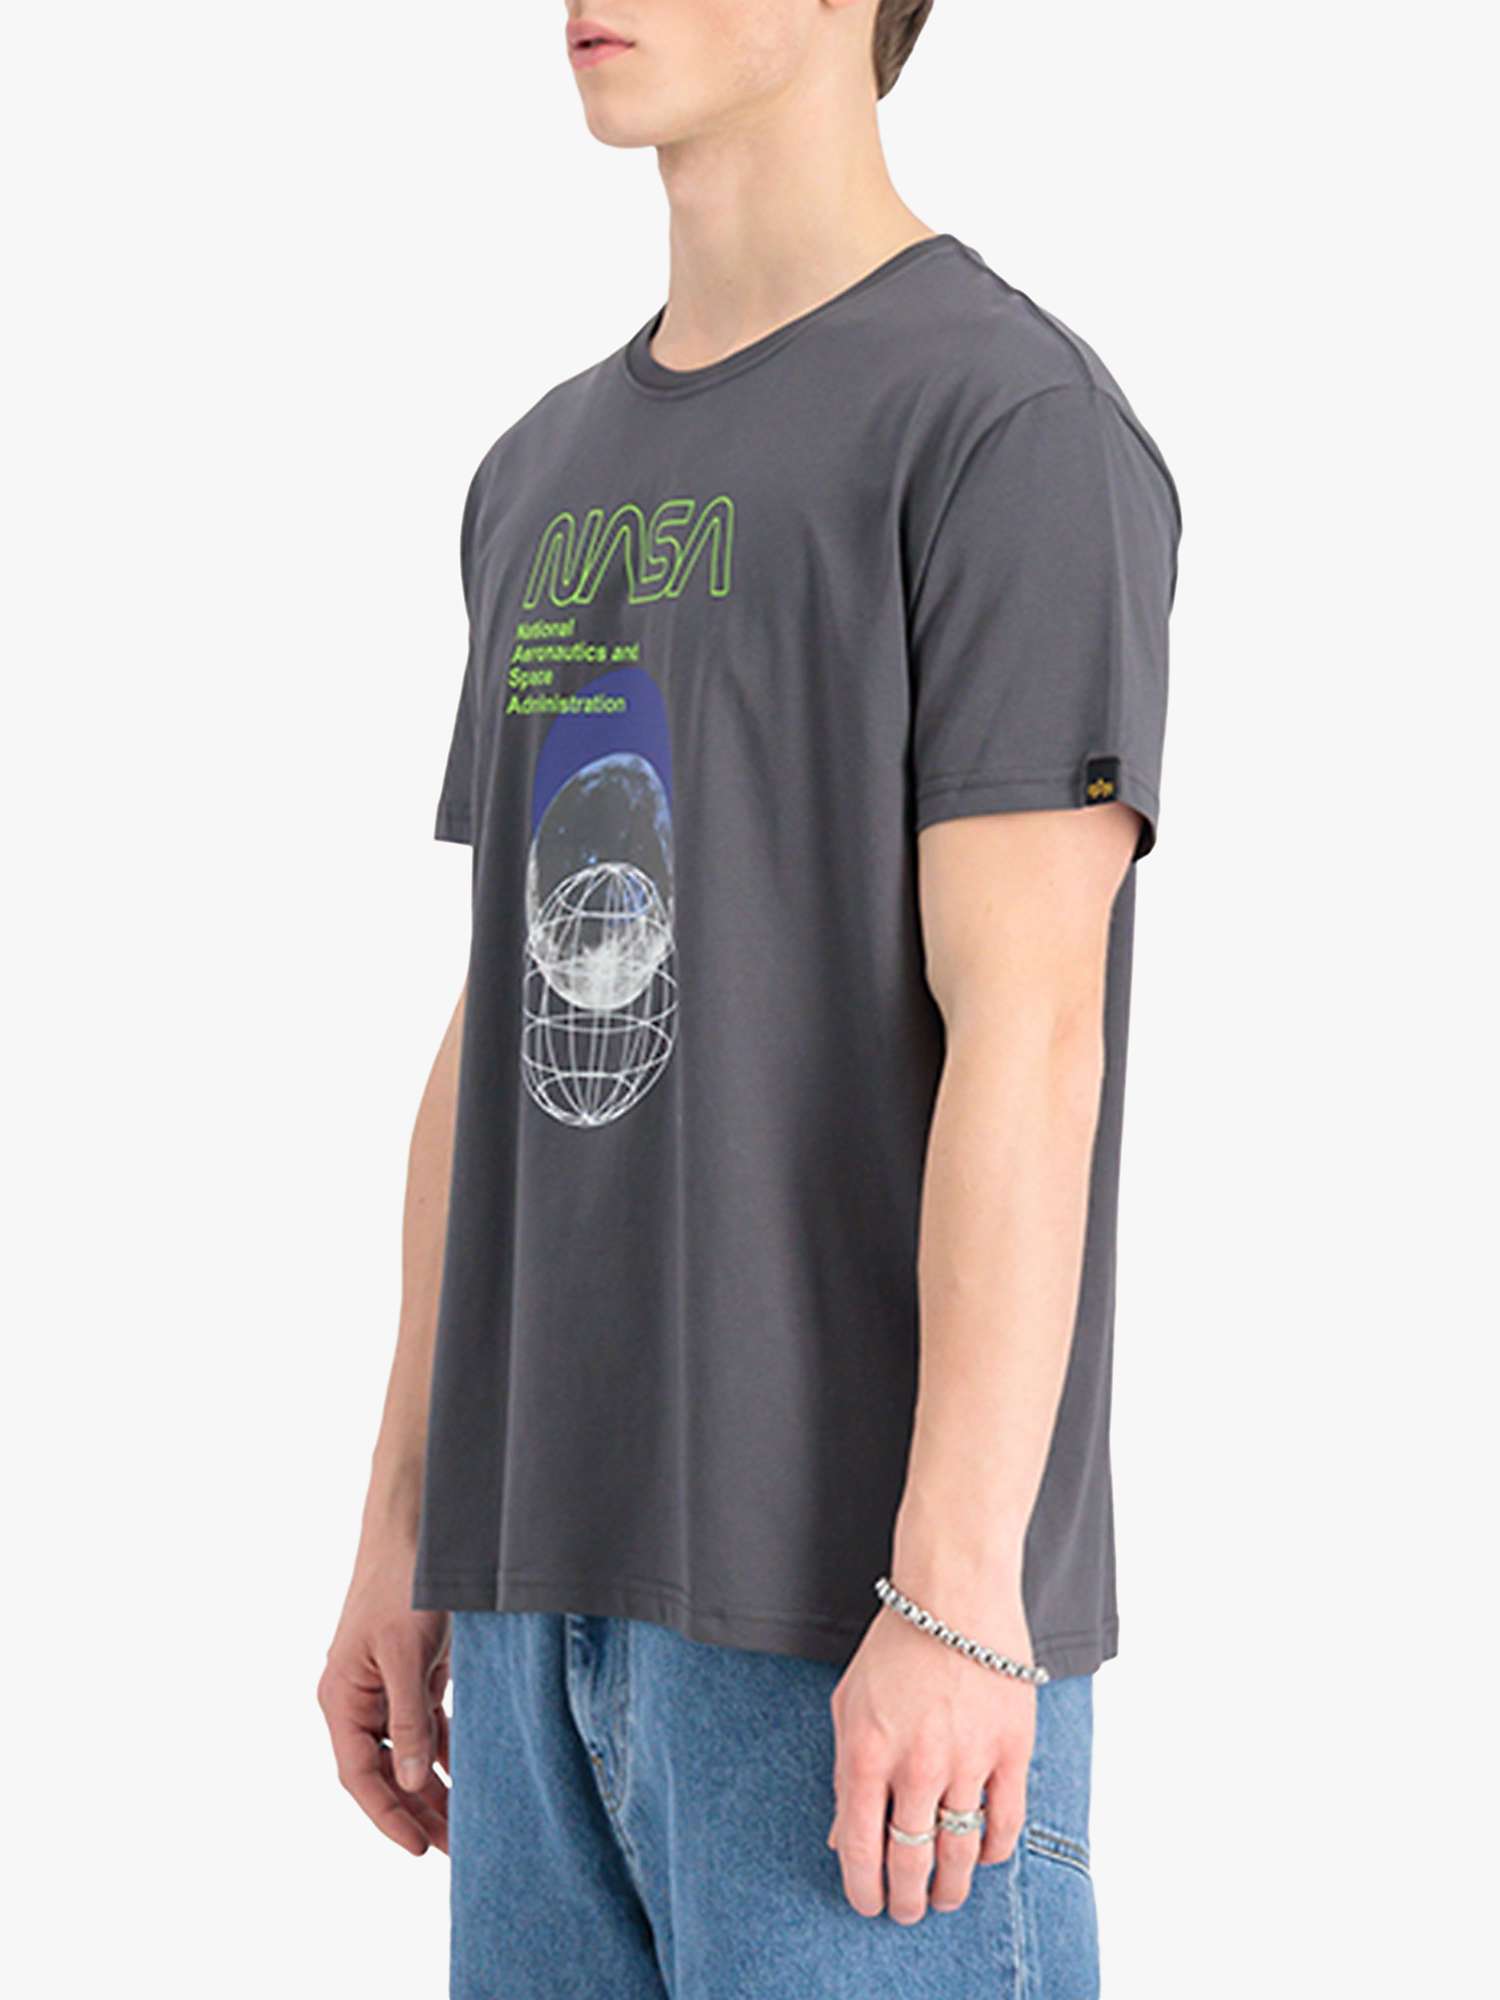 Buy Alpha Industries NASA Orbit Print T-Shirt Online at johnlewis.com